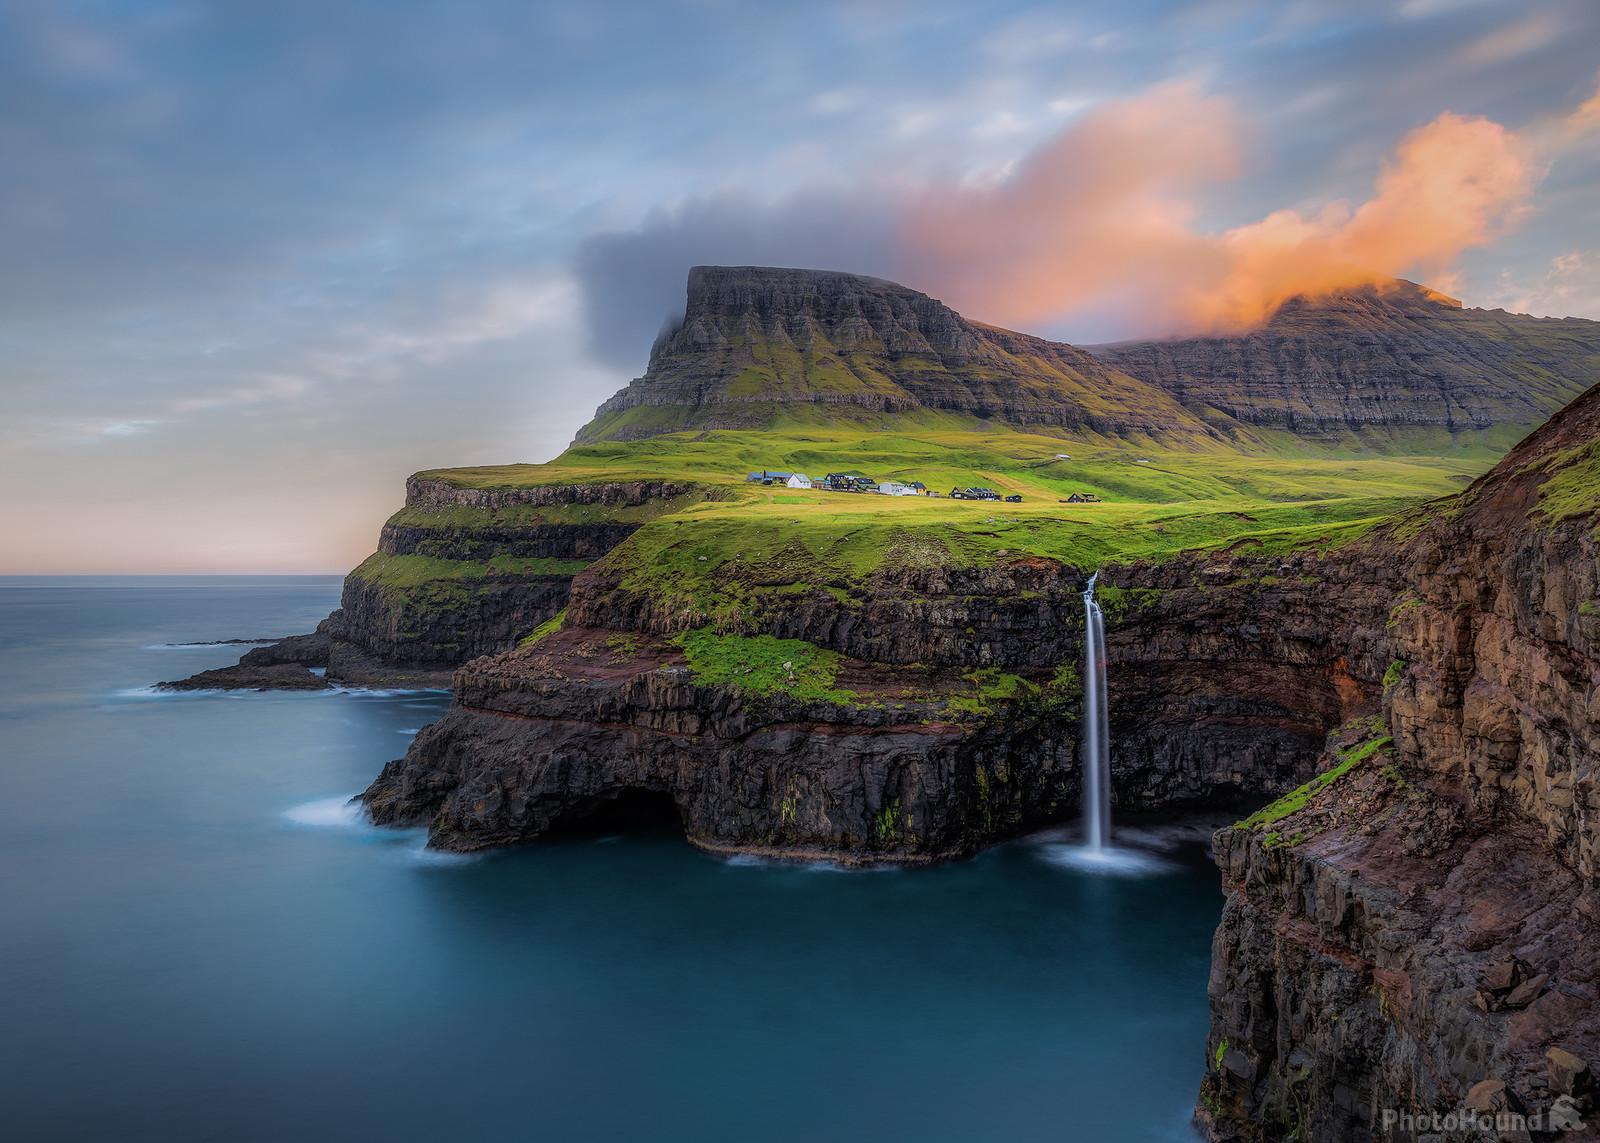 Faroe Islands photo locations